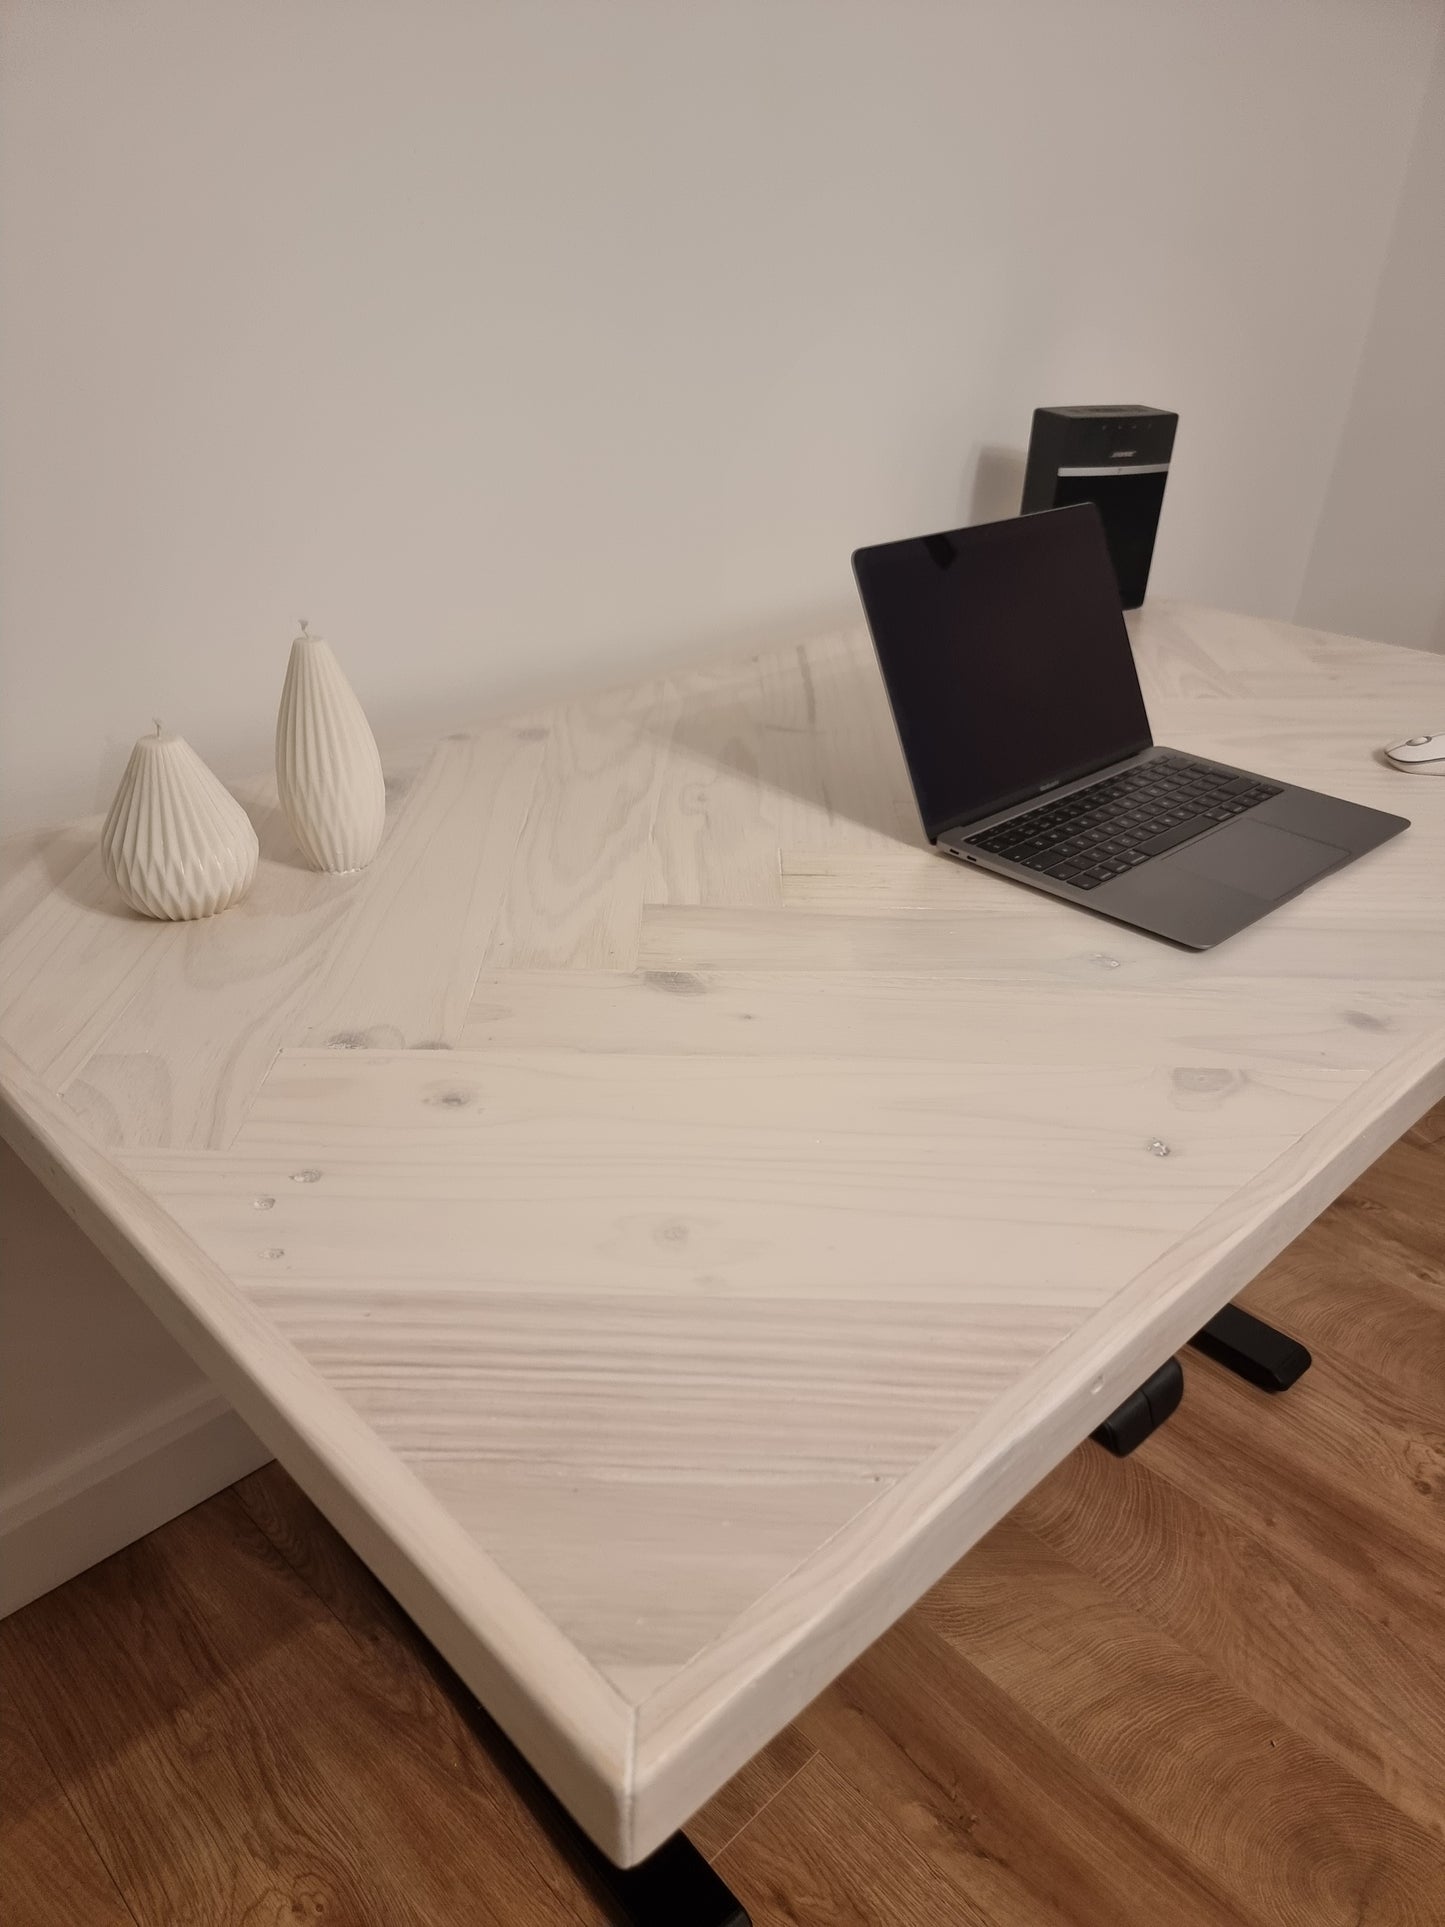 Height adjustable desk